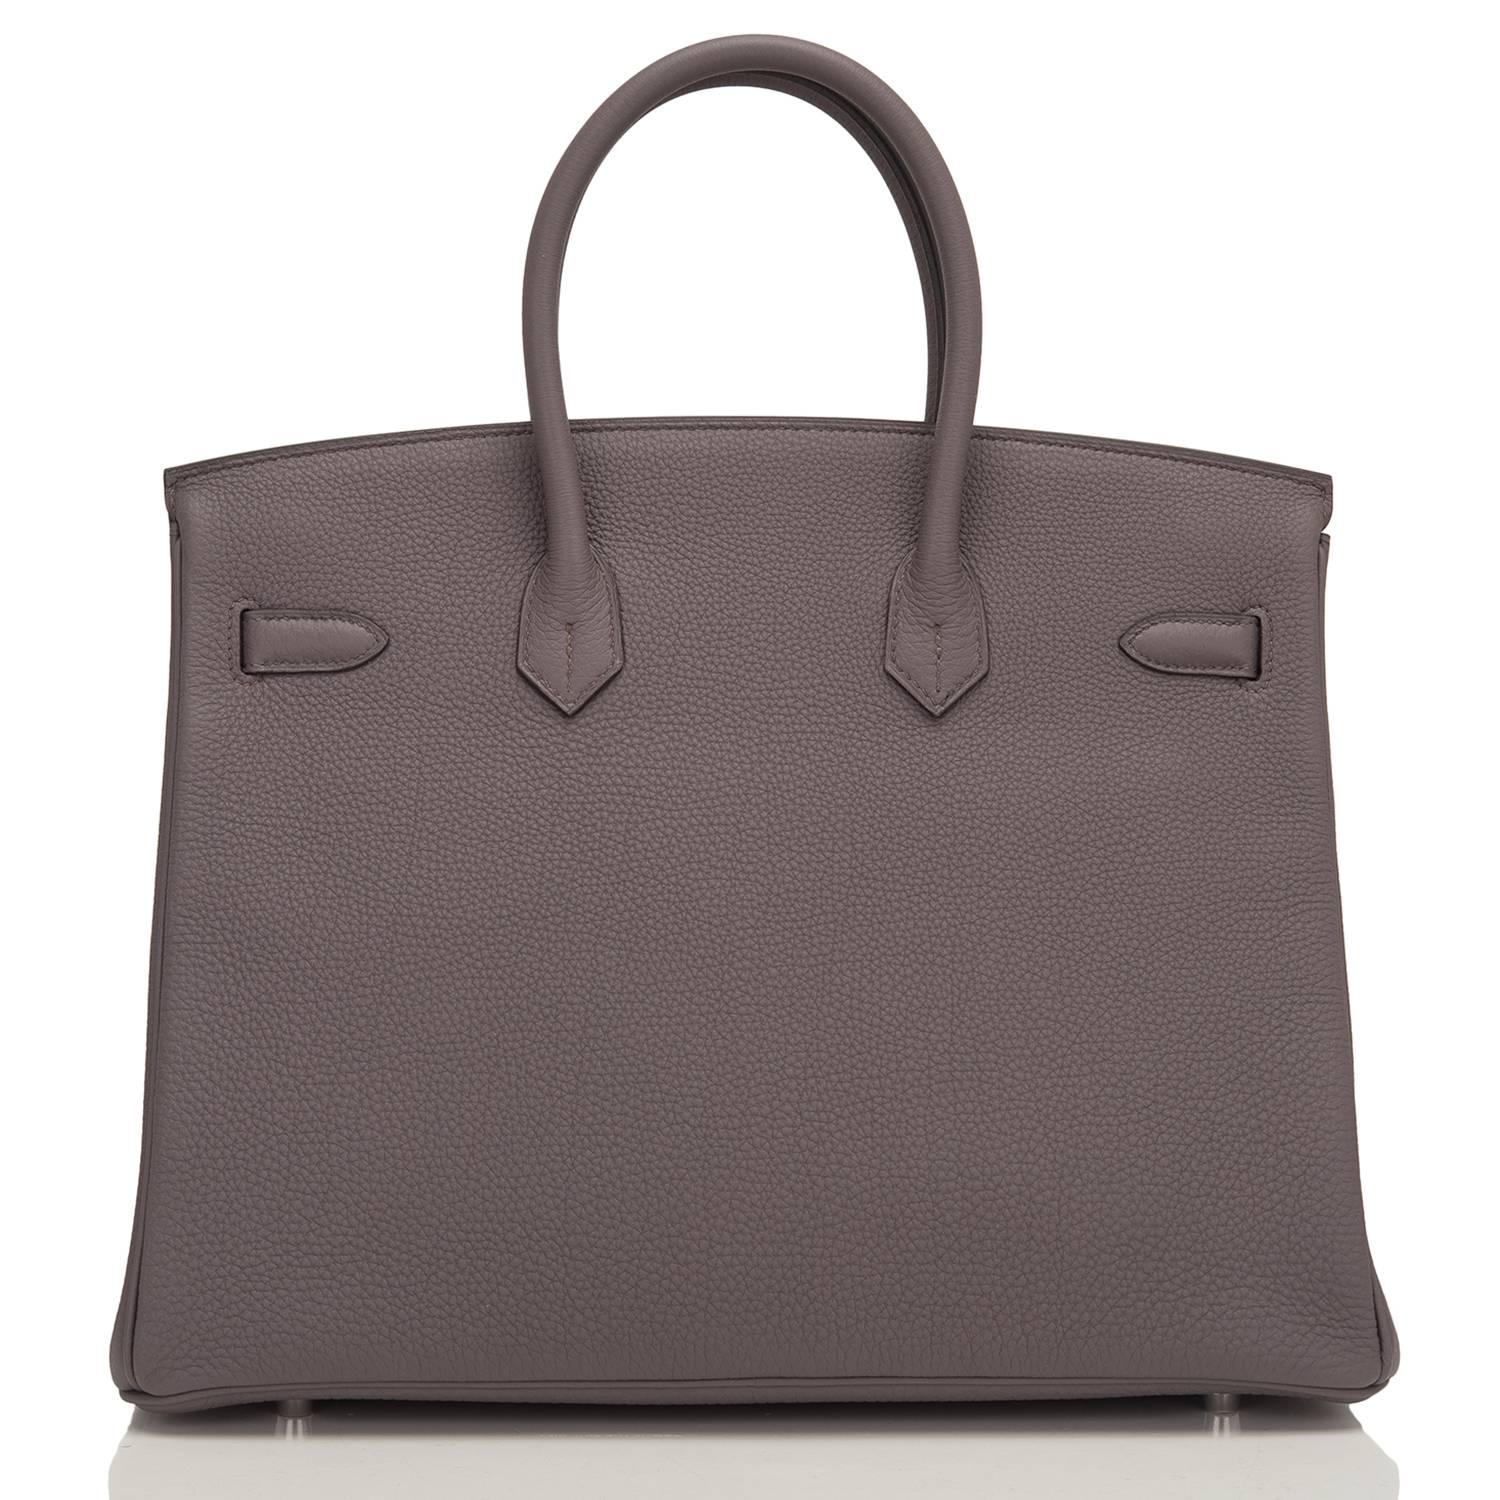 Hermes Etain Togo 35cm Palladium Hardware Birkin Bag In New Condition For Sale In New York, NY